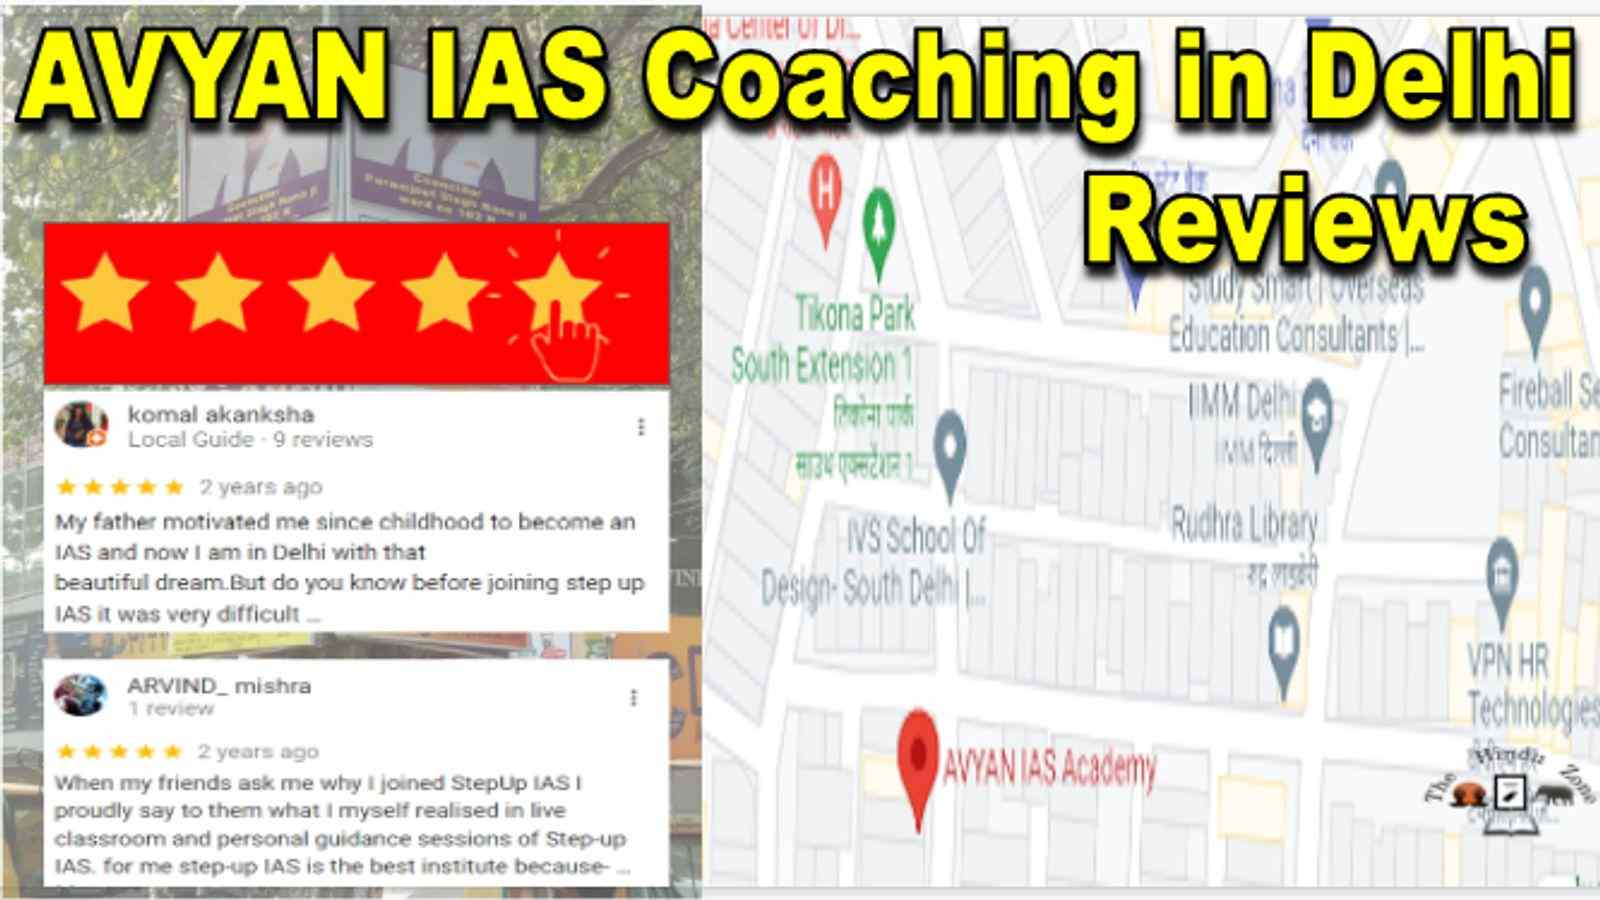 Avyan IAS Coaching in Delhi Reviews